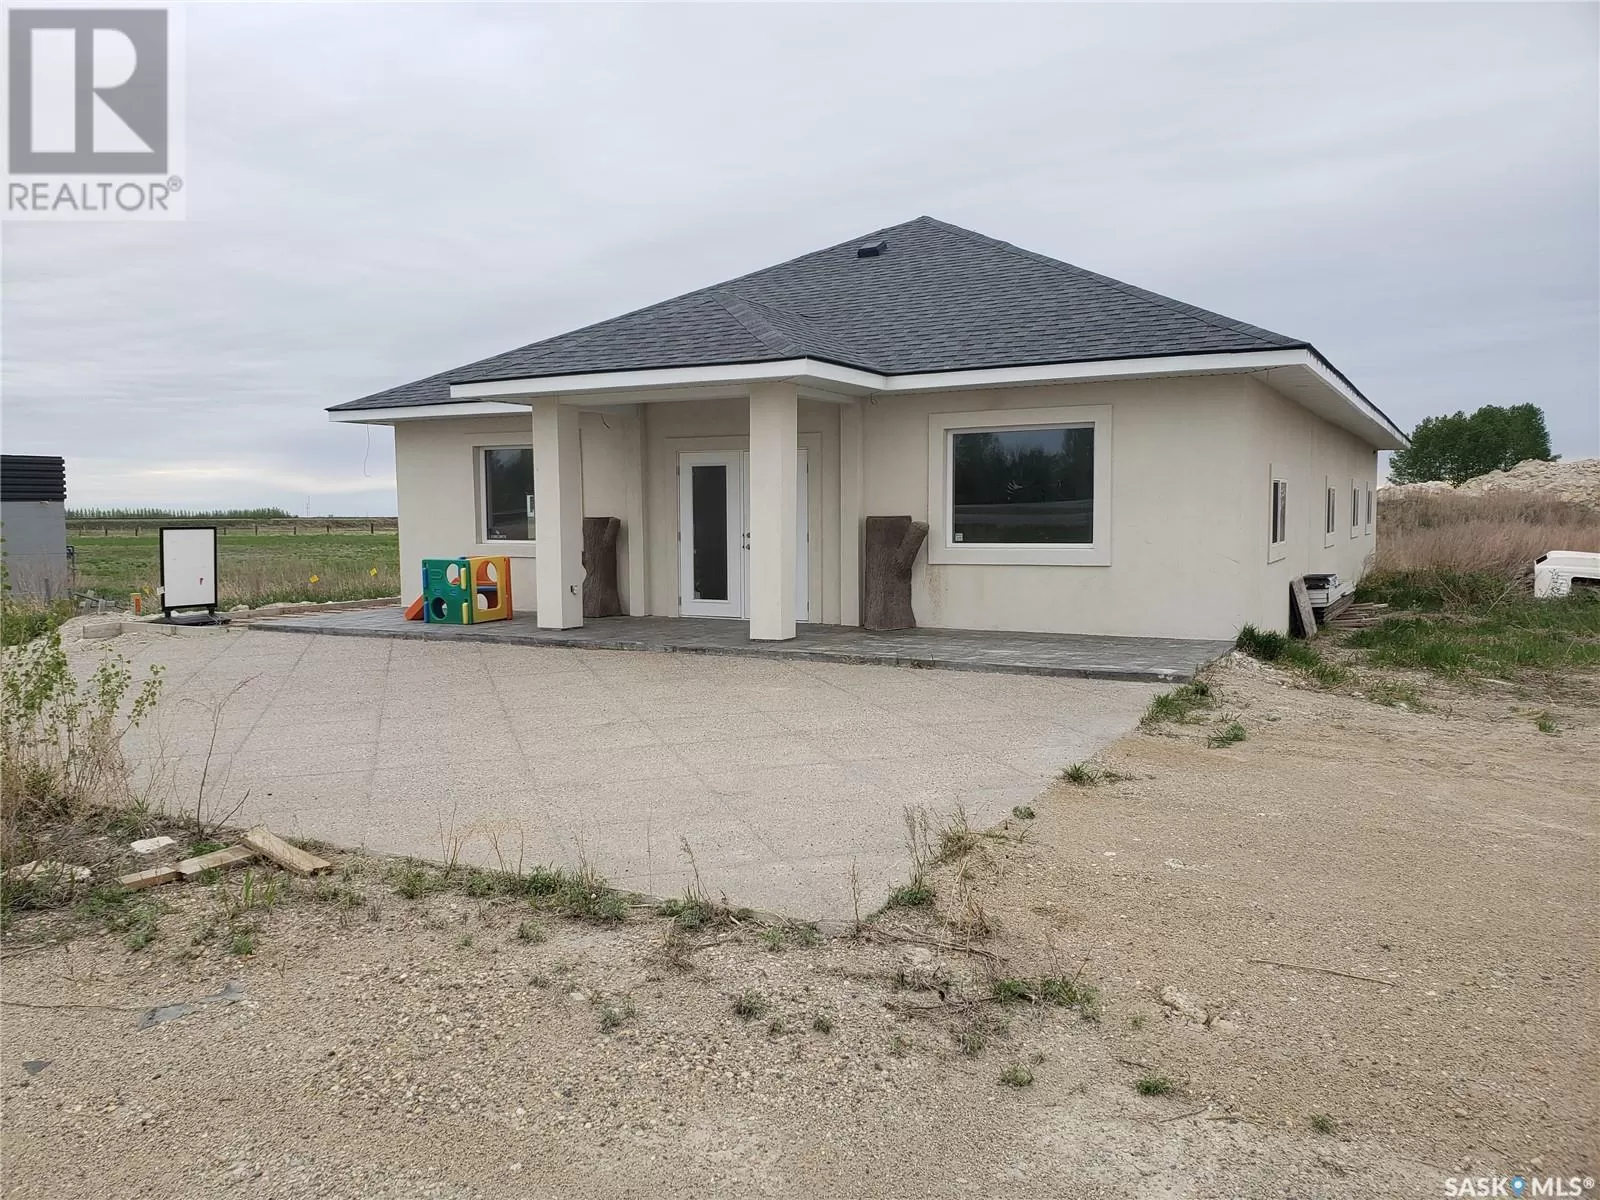 Offices for rent: Highway #624 Tristar, Pilot Butte, Saskatchewan S0G 3Z0